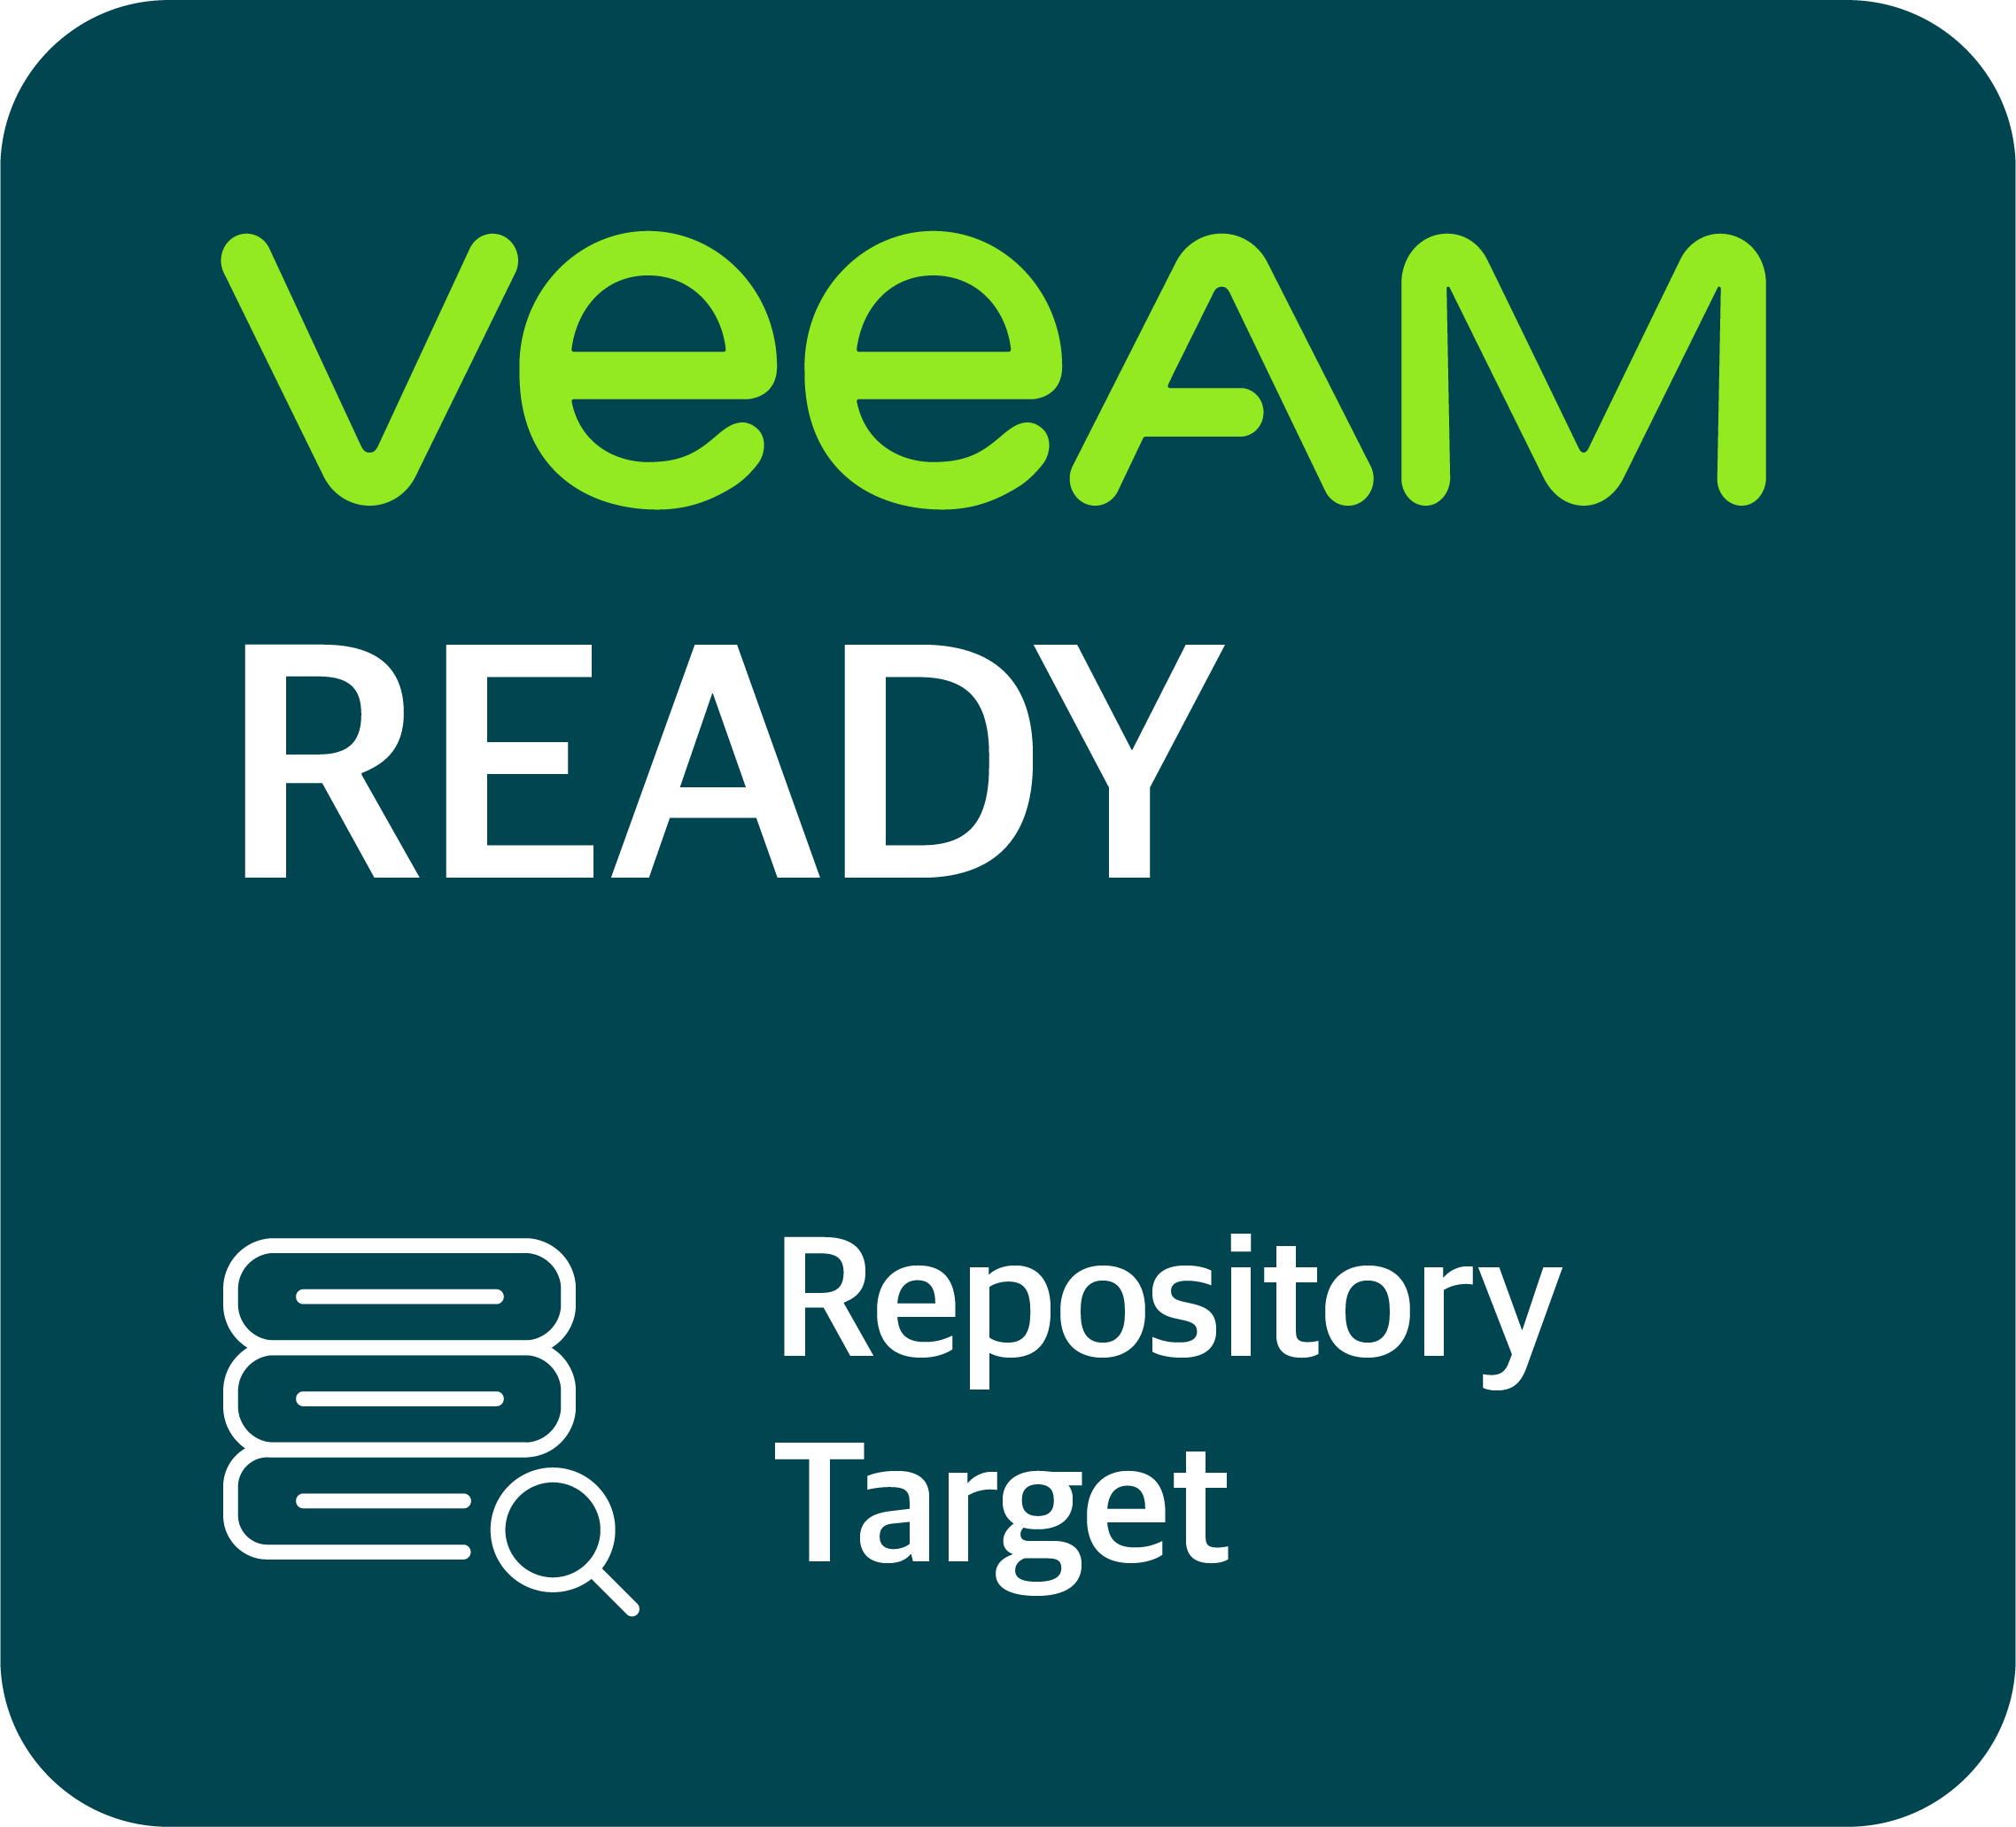 veeam-ready-repository-target